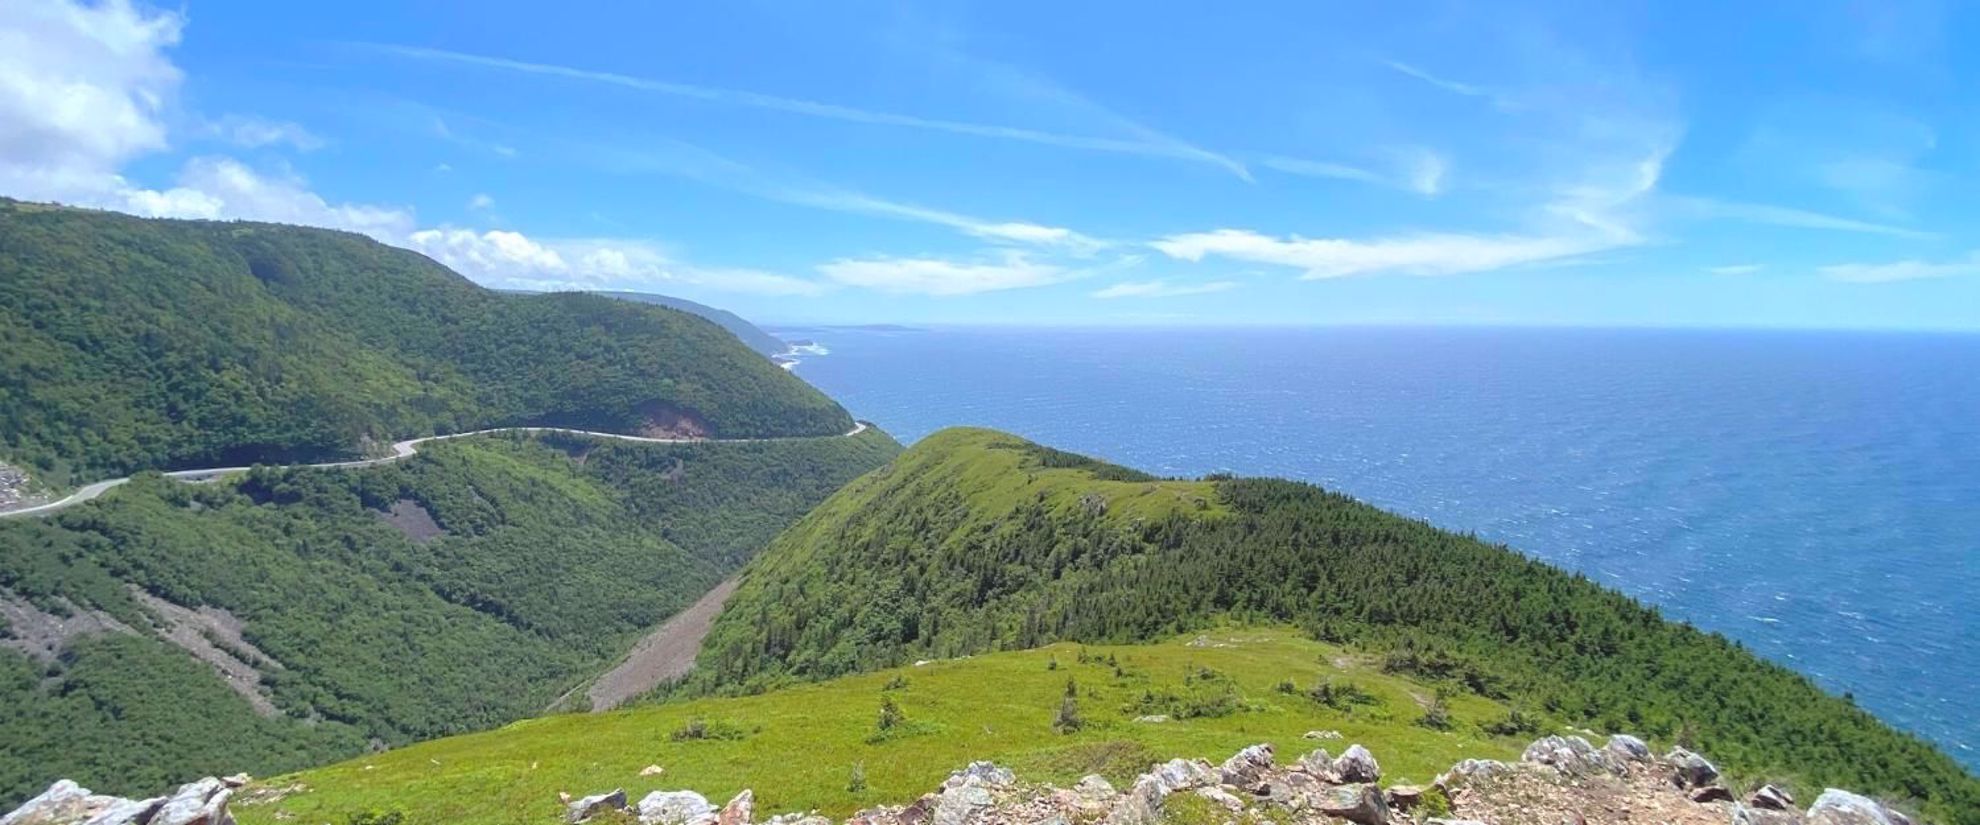 Discover stunning vistas in Nova Scotia